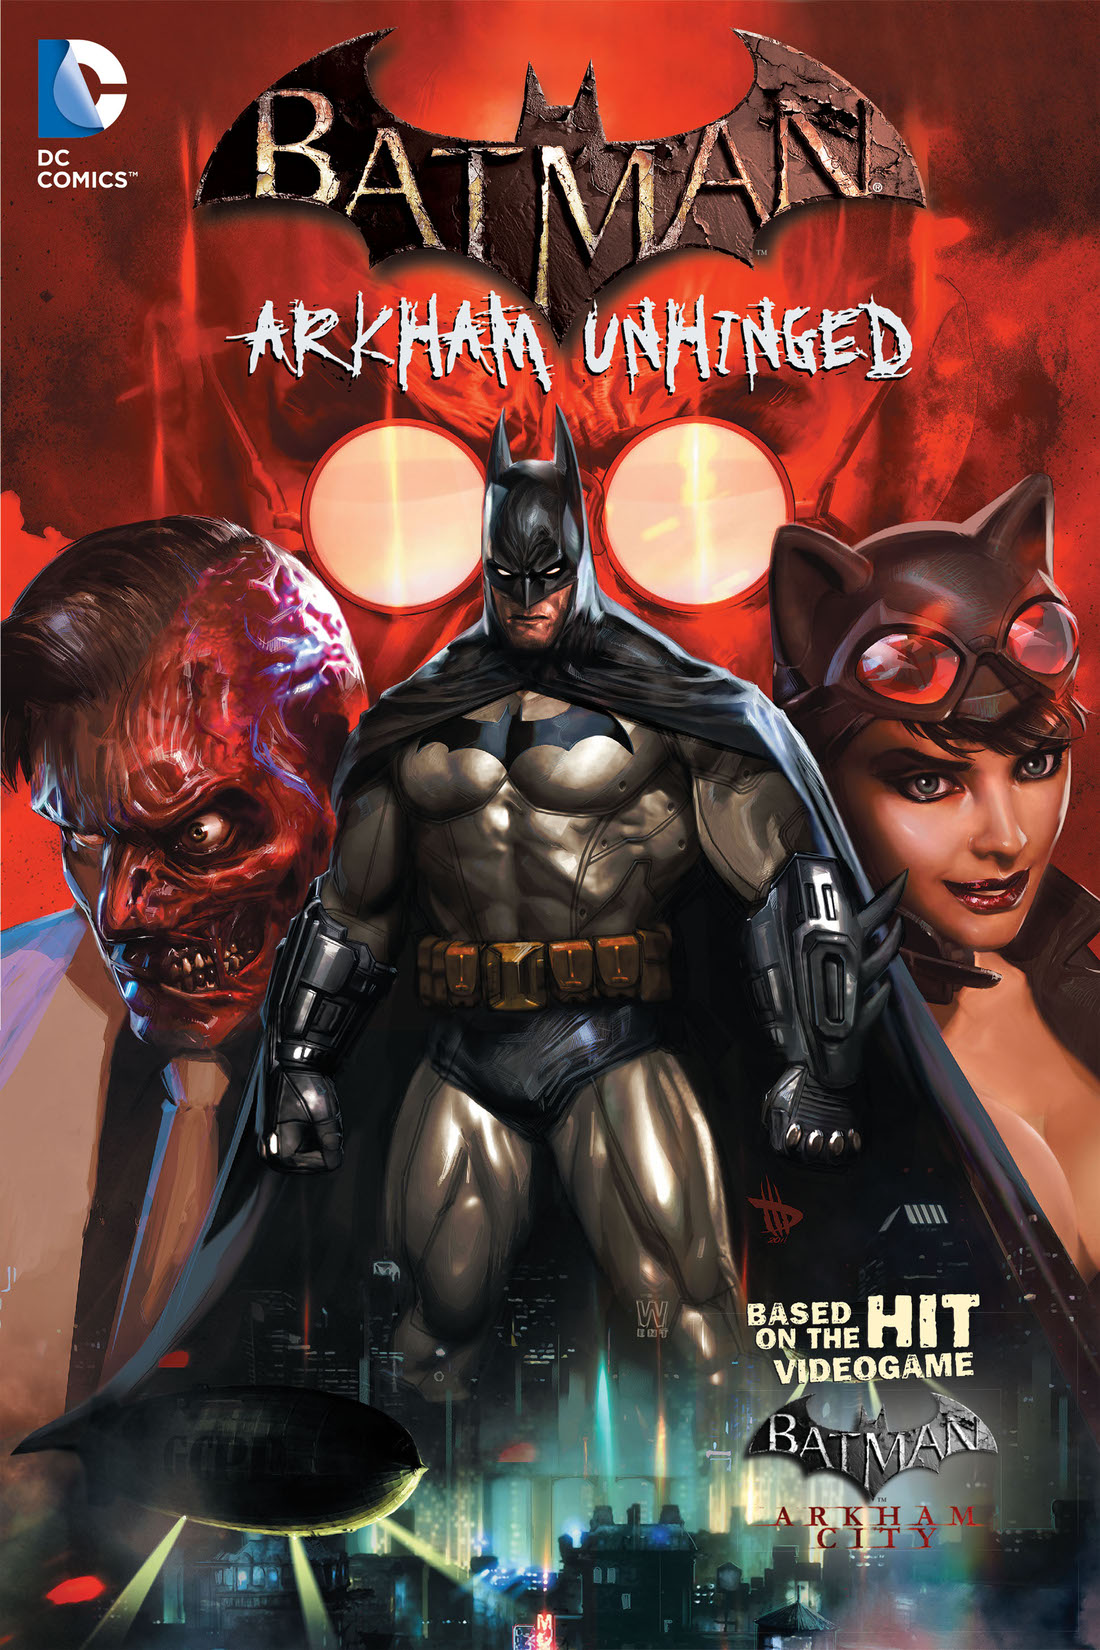 Batman: Arkham Unhinged preview images